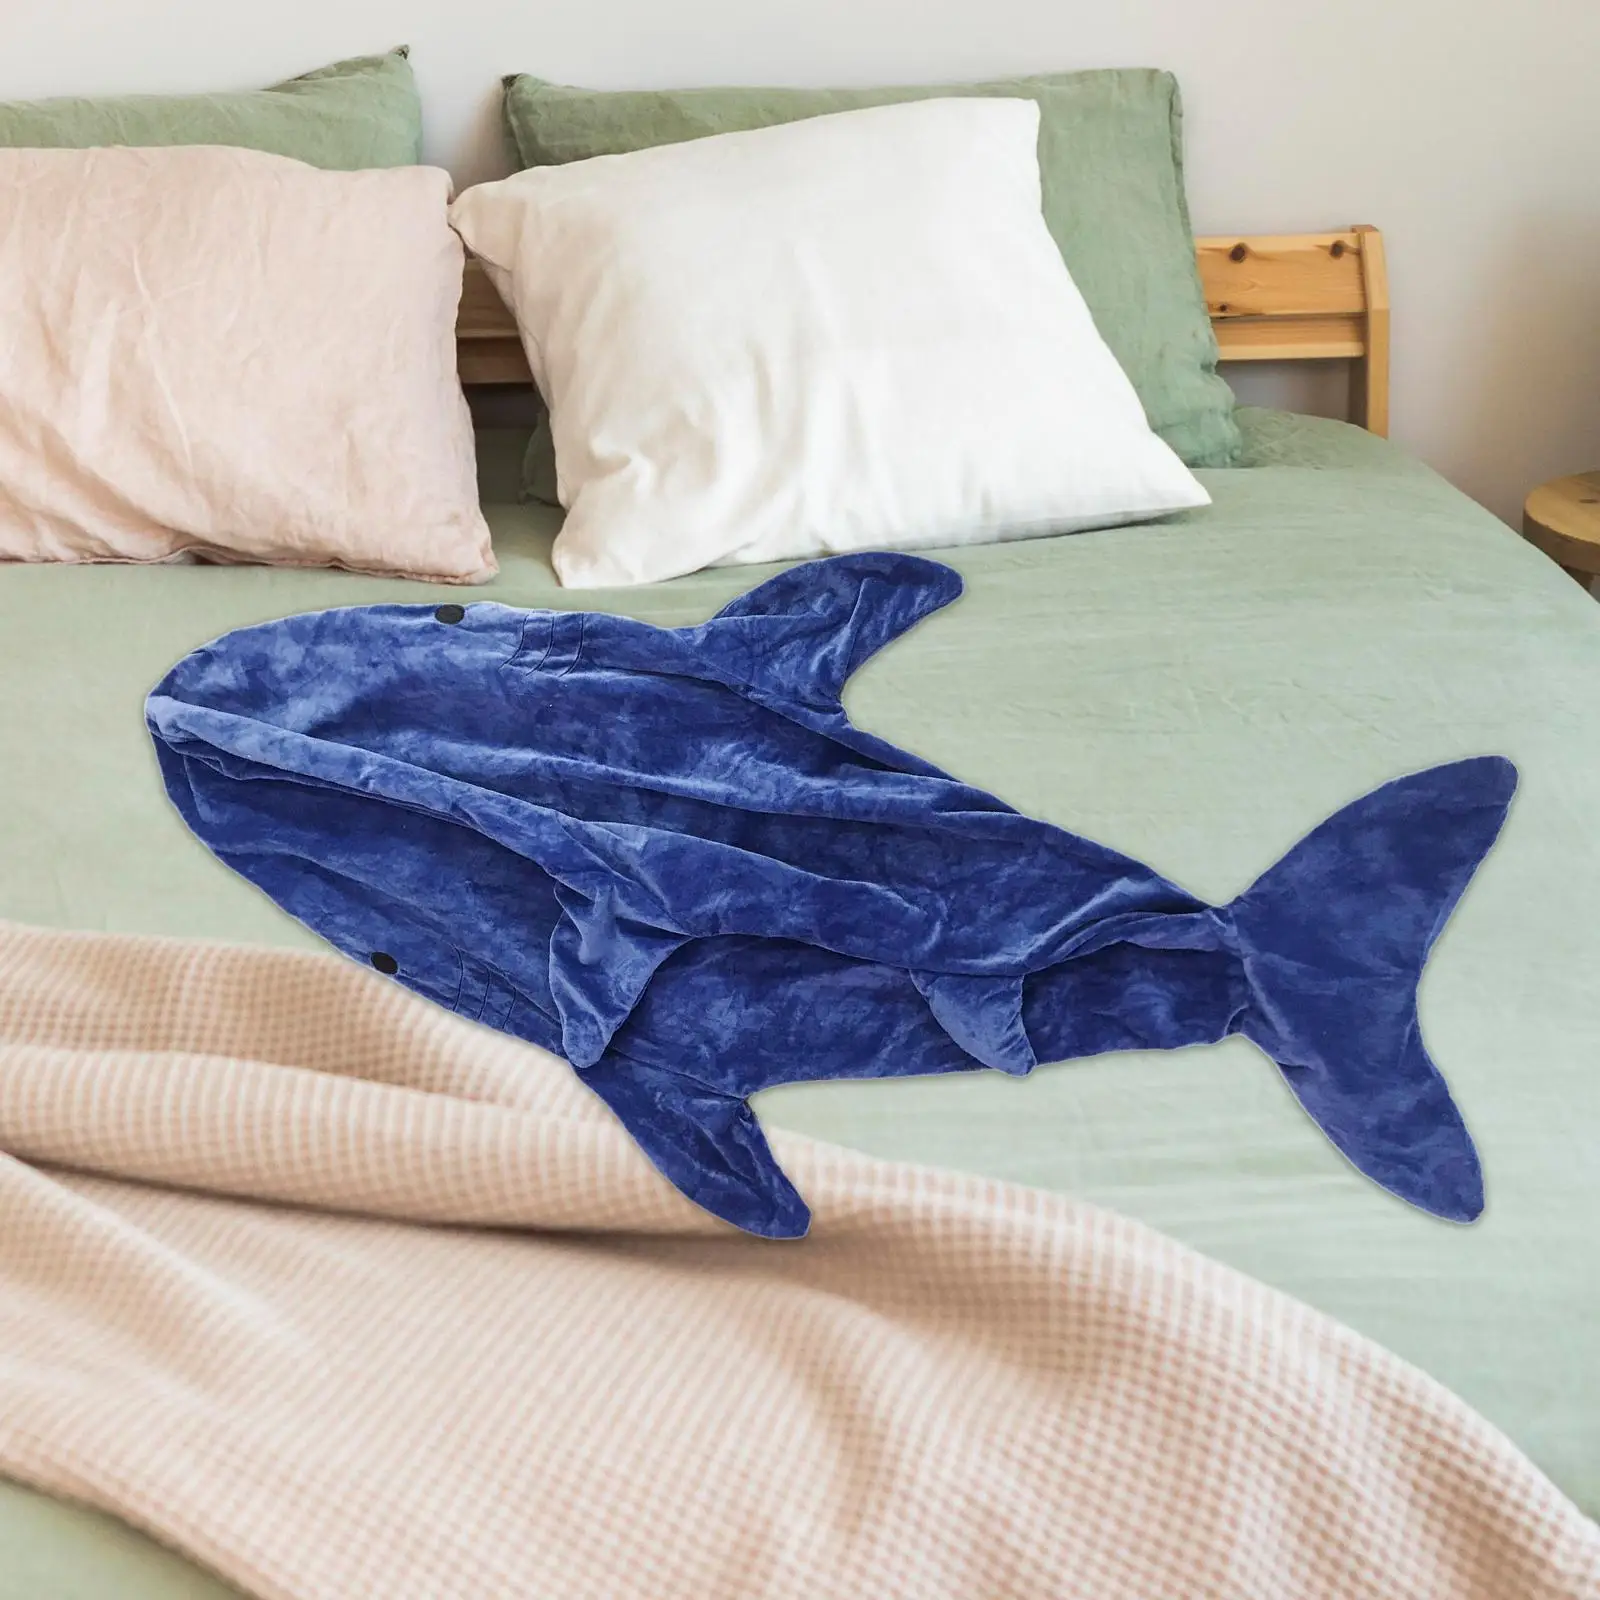 Shark Plush Doll Cover Multipurpose Car Decoration Shark Cushion Cover for Living Room Valentine Halloween Housewarming Birthday